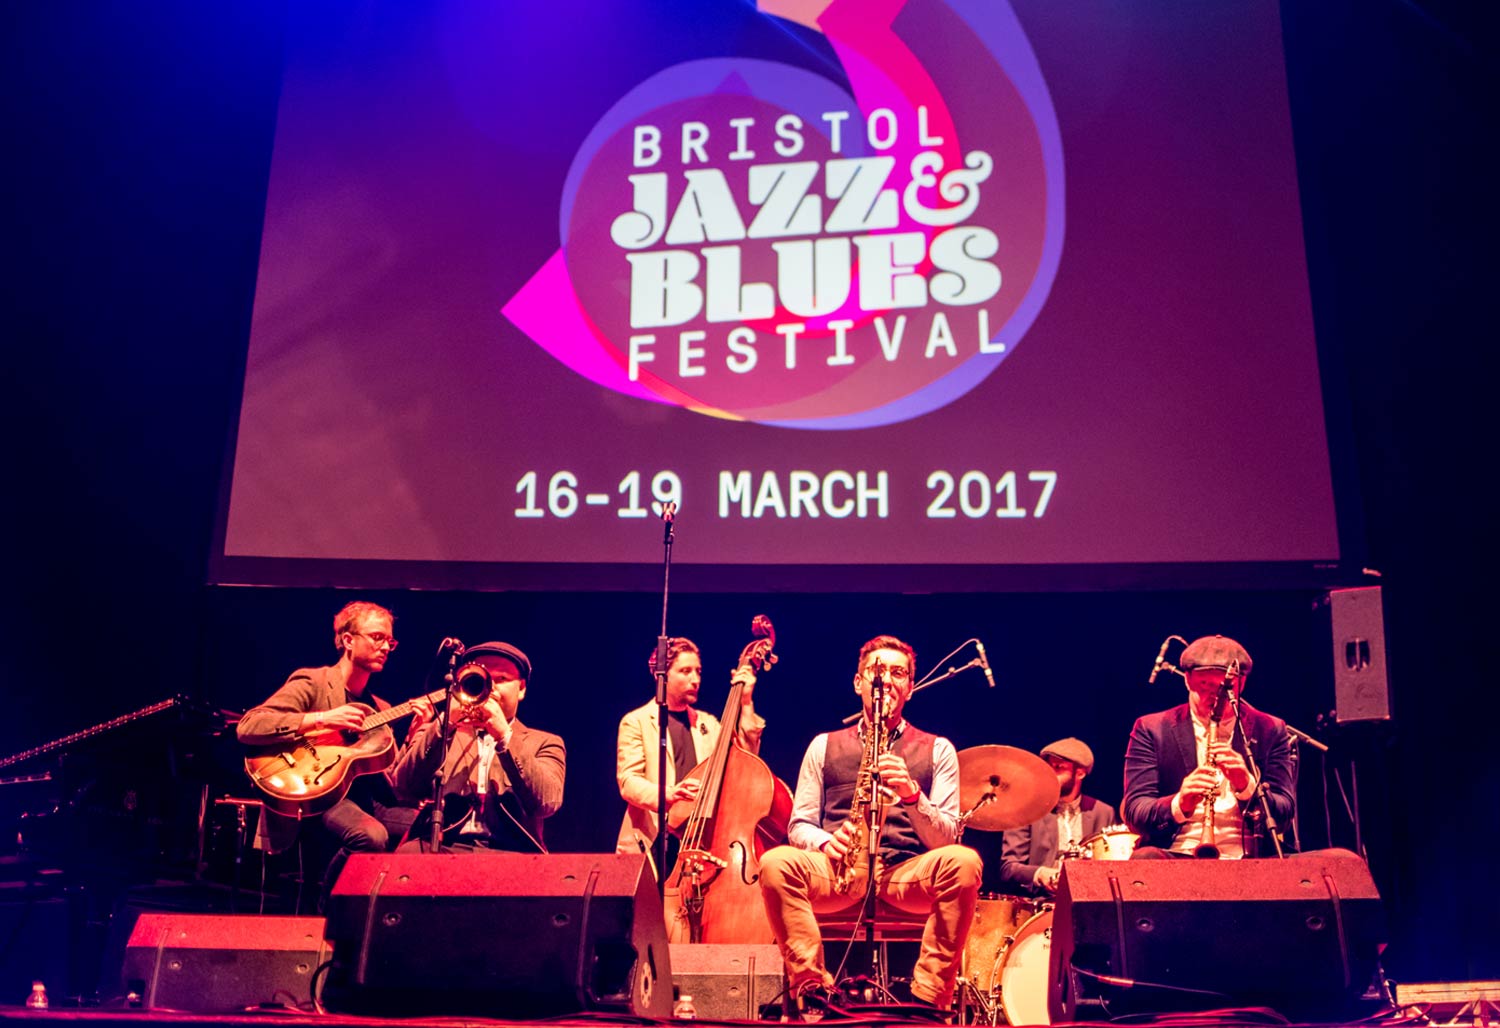 Bristol Jazz and Blues Festival